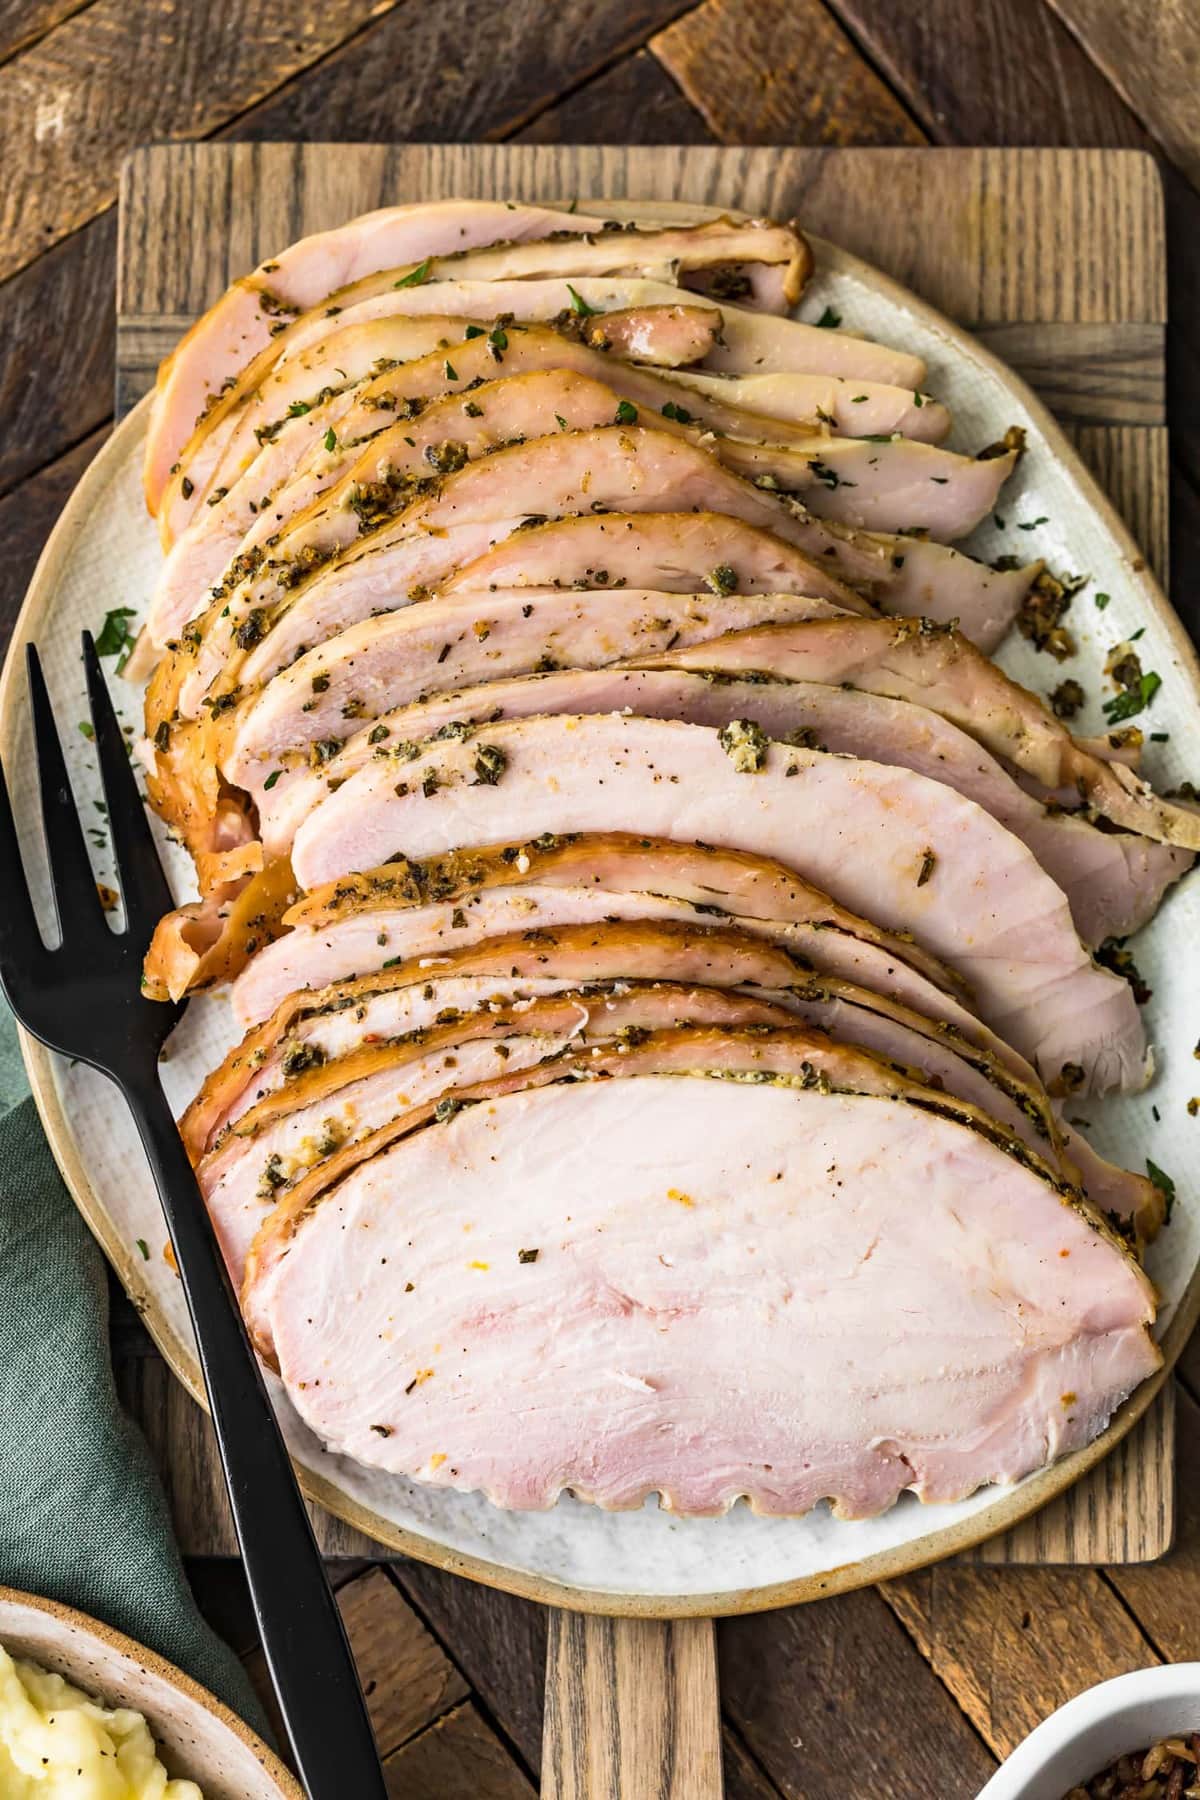 juicy smoked sliced turkey breast on a cutting board